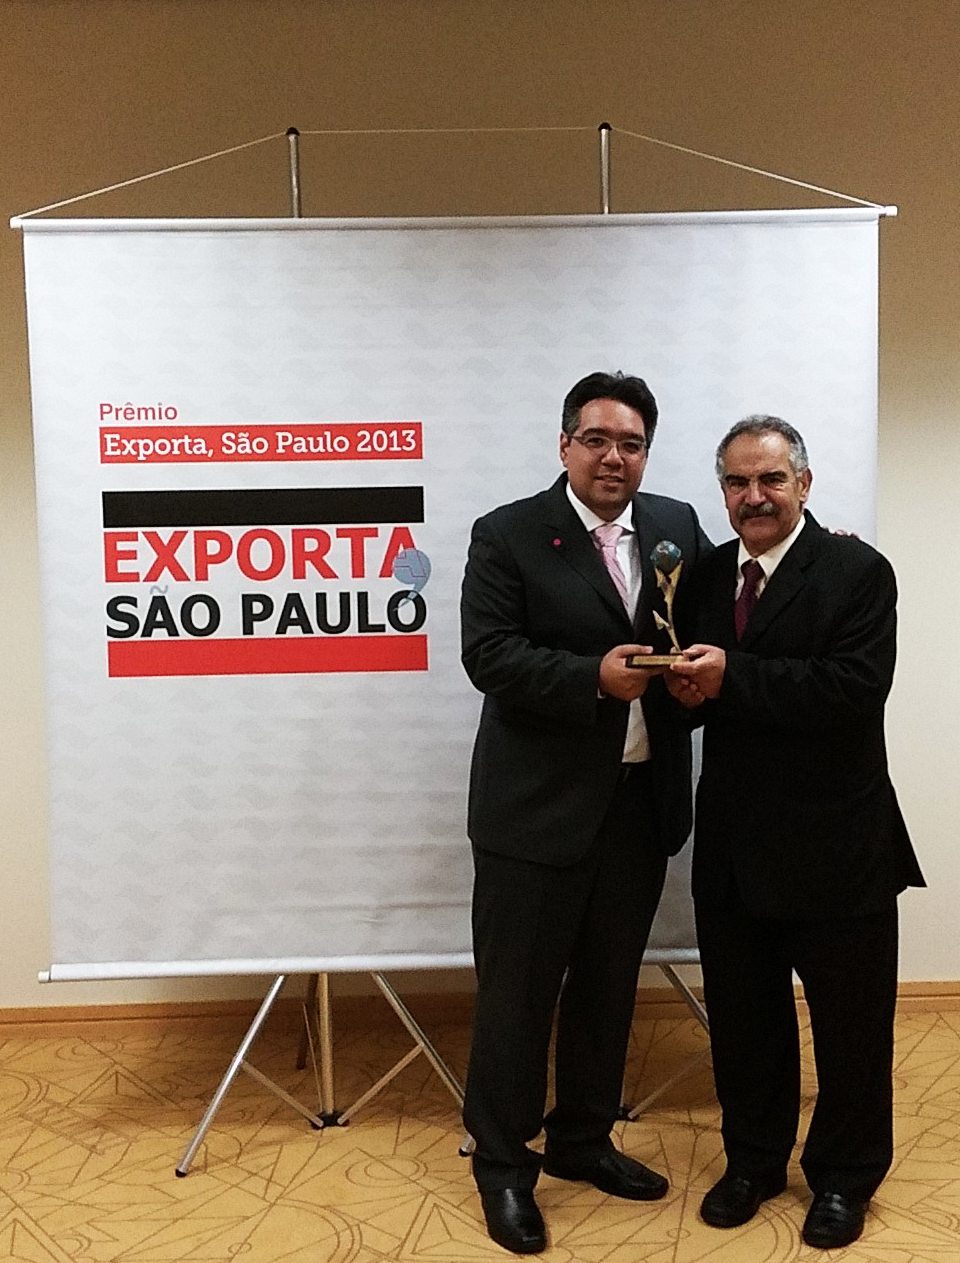 ACURA awarded in Exporta SP